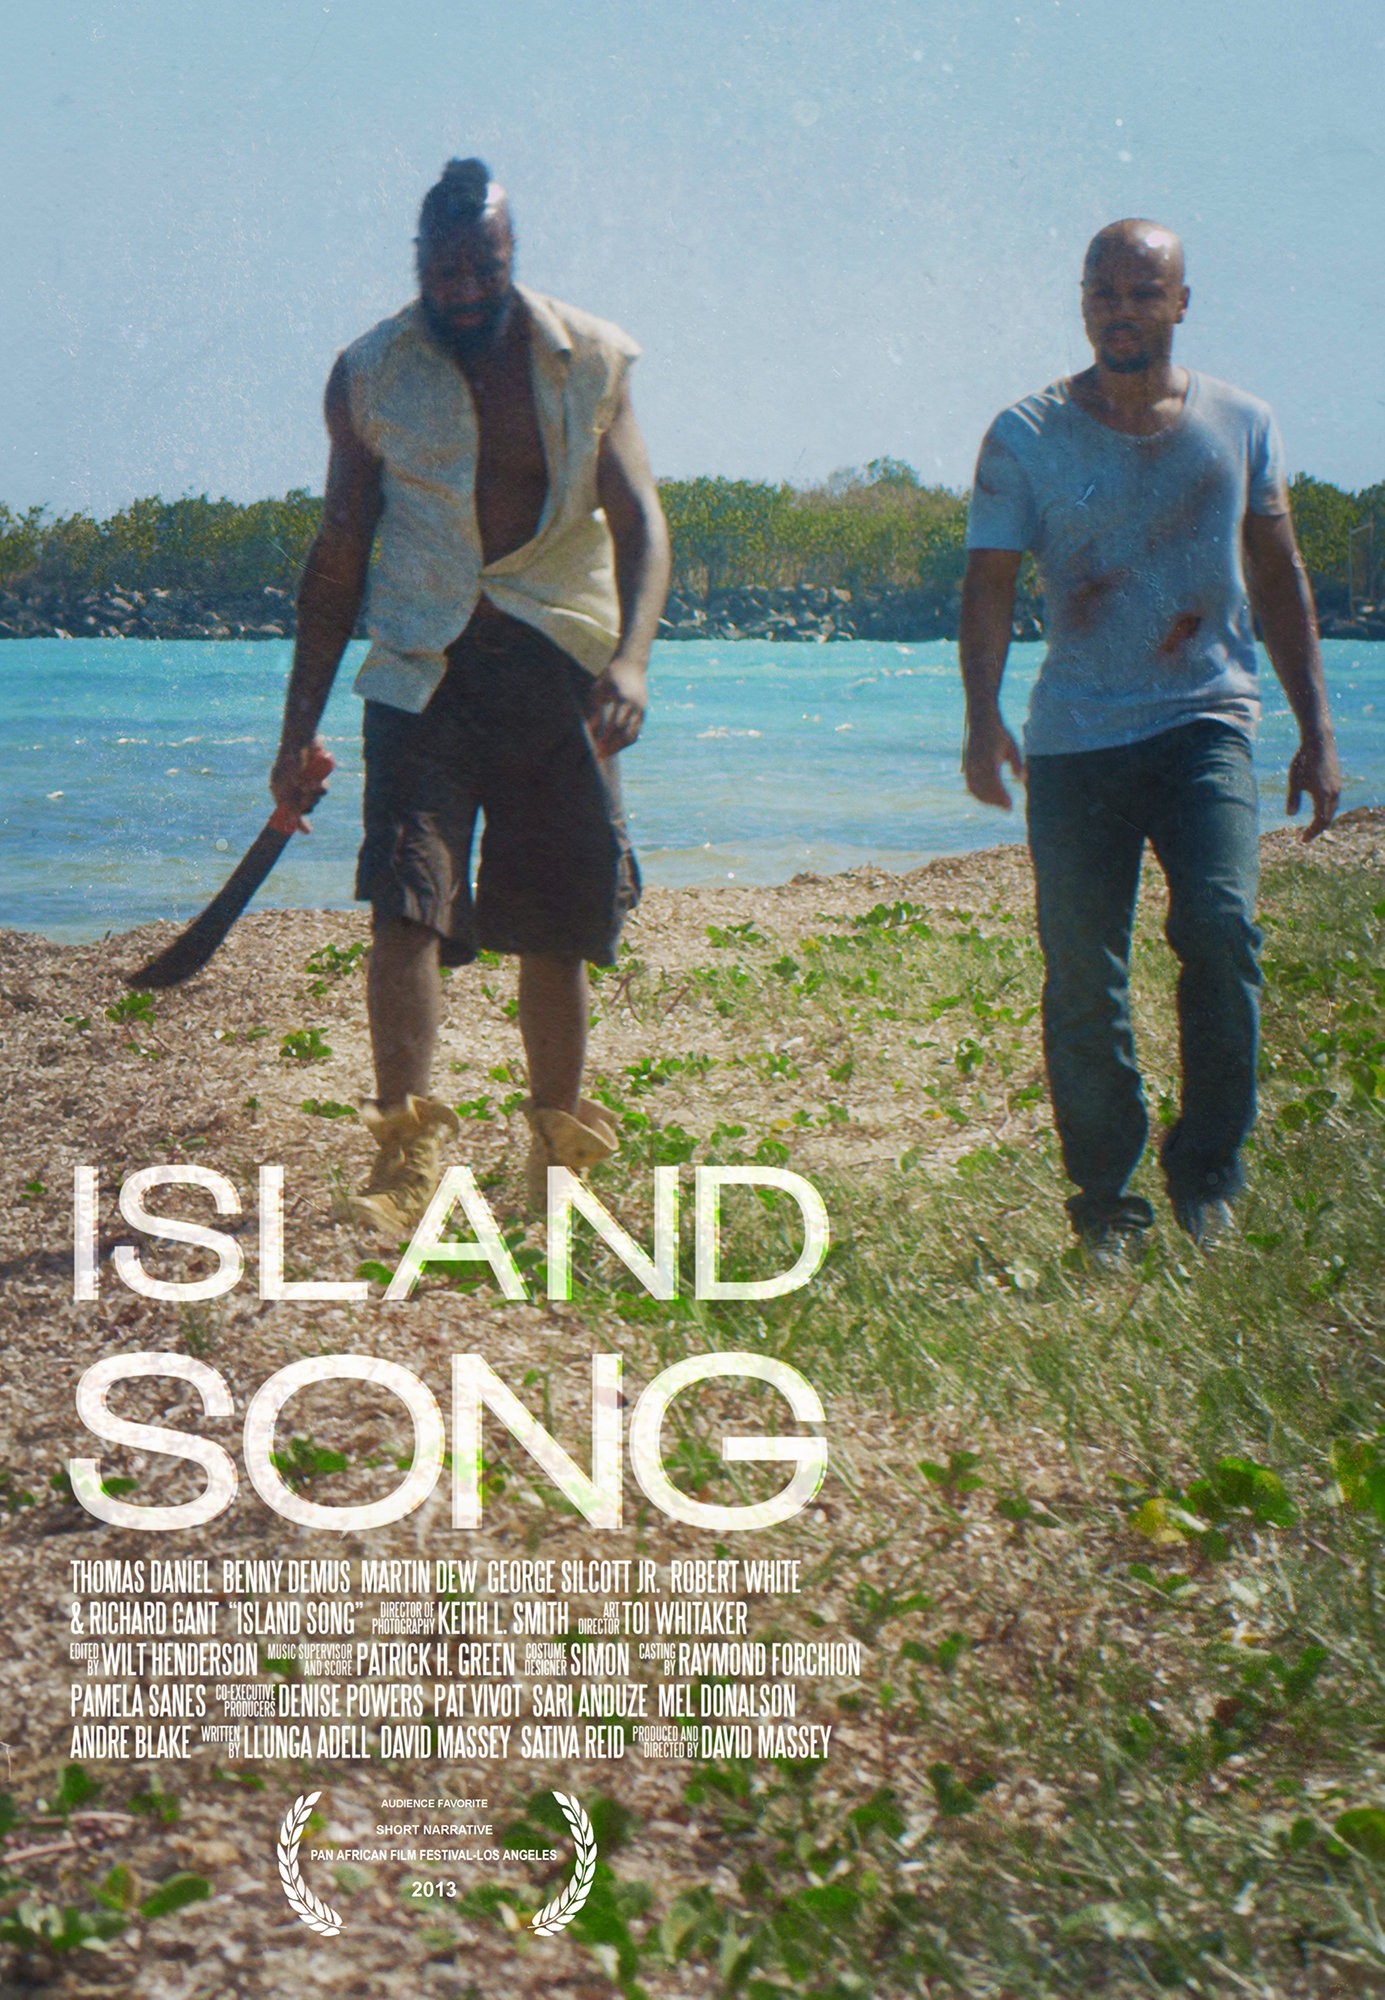 minute of islands soundtrack